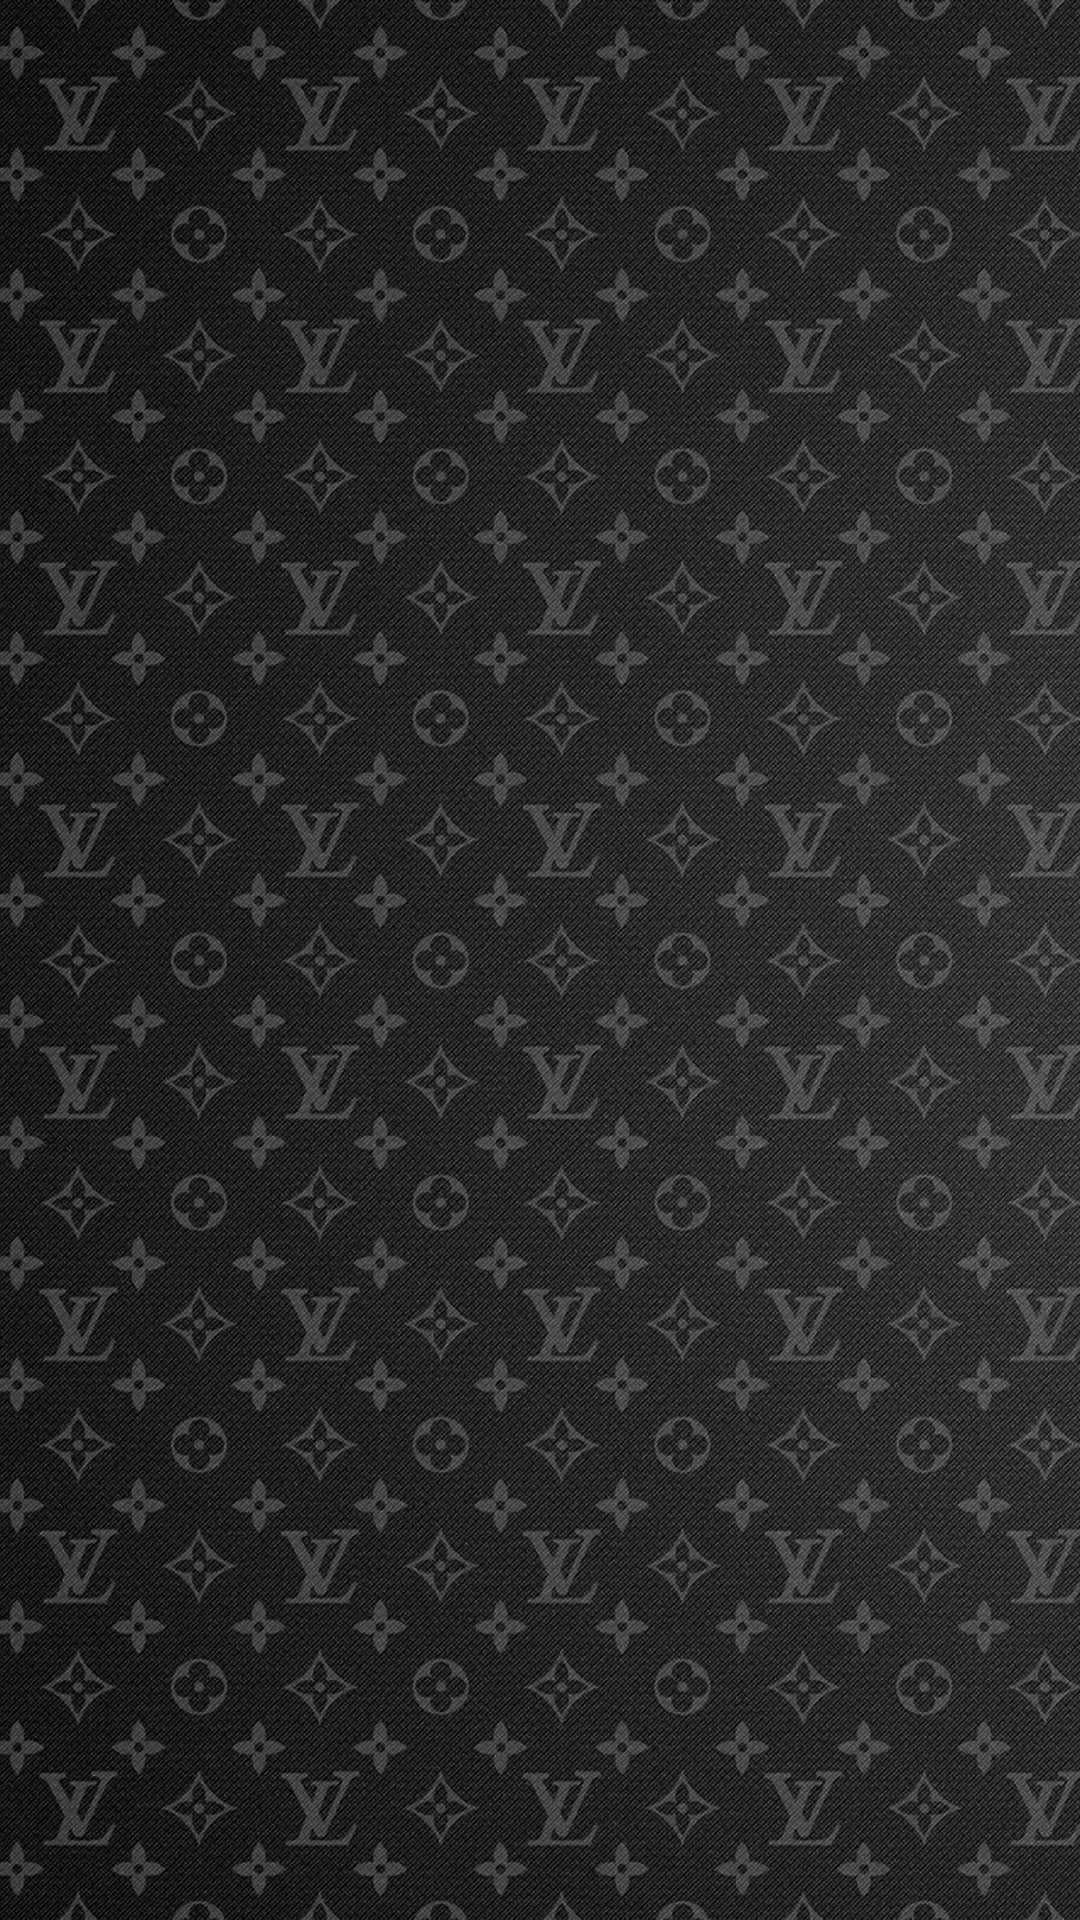 Louis Vuitton 1440 X 2560 Wallpaper